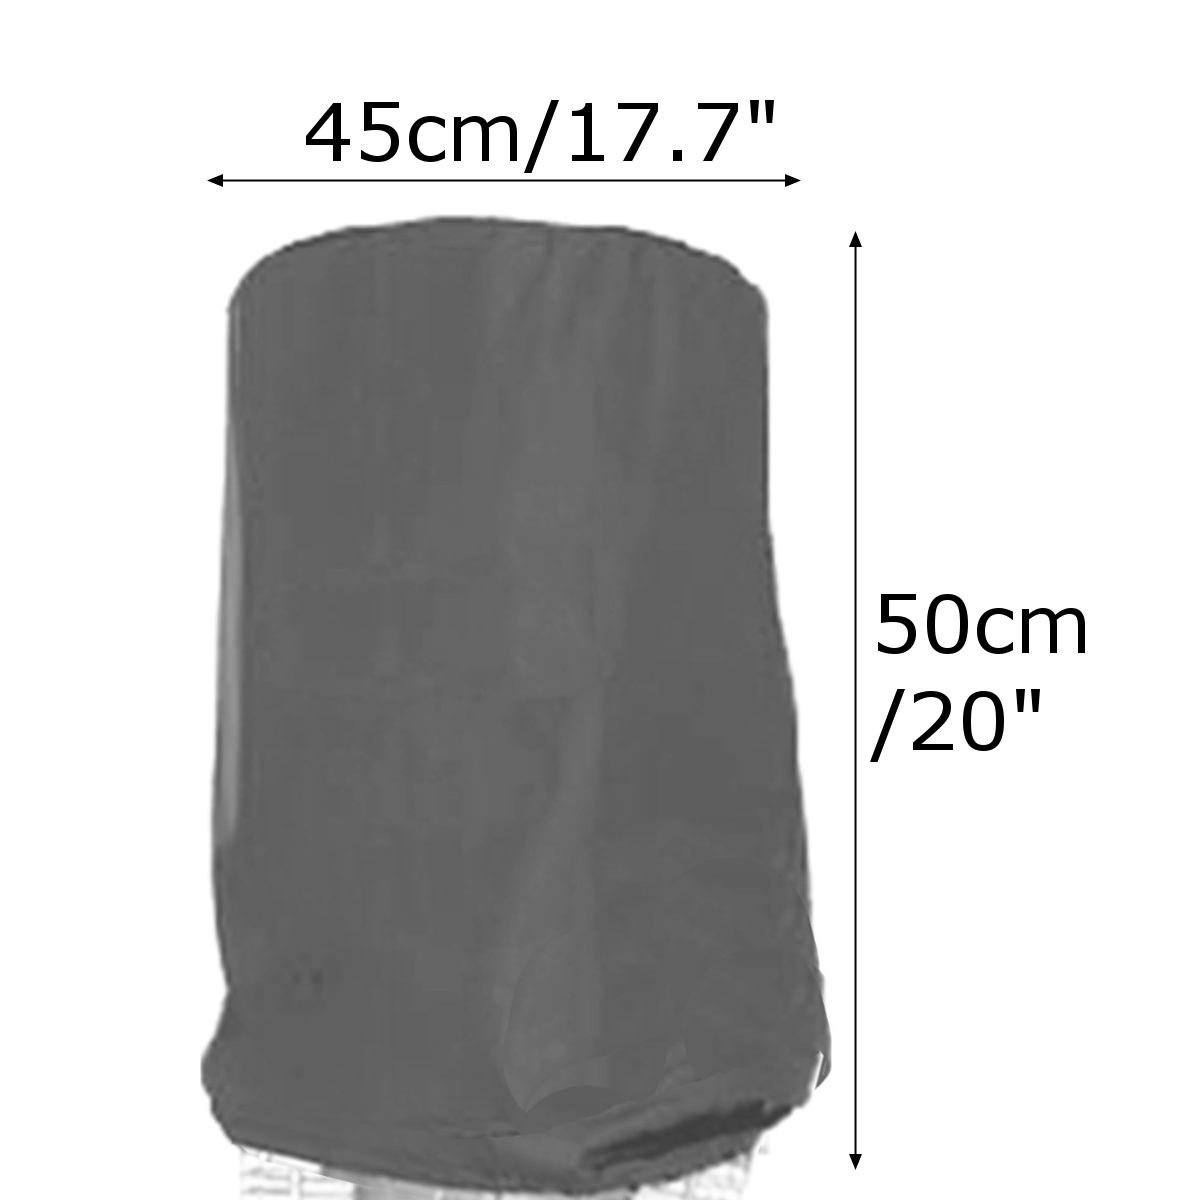 504545cm-Vinyl-Water-Shield-Dust-Cover-For-Yard-Area-Heater-Washable-Waterproof-UV-Resistant-Dustpro-1418281-6